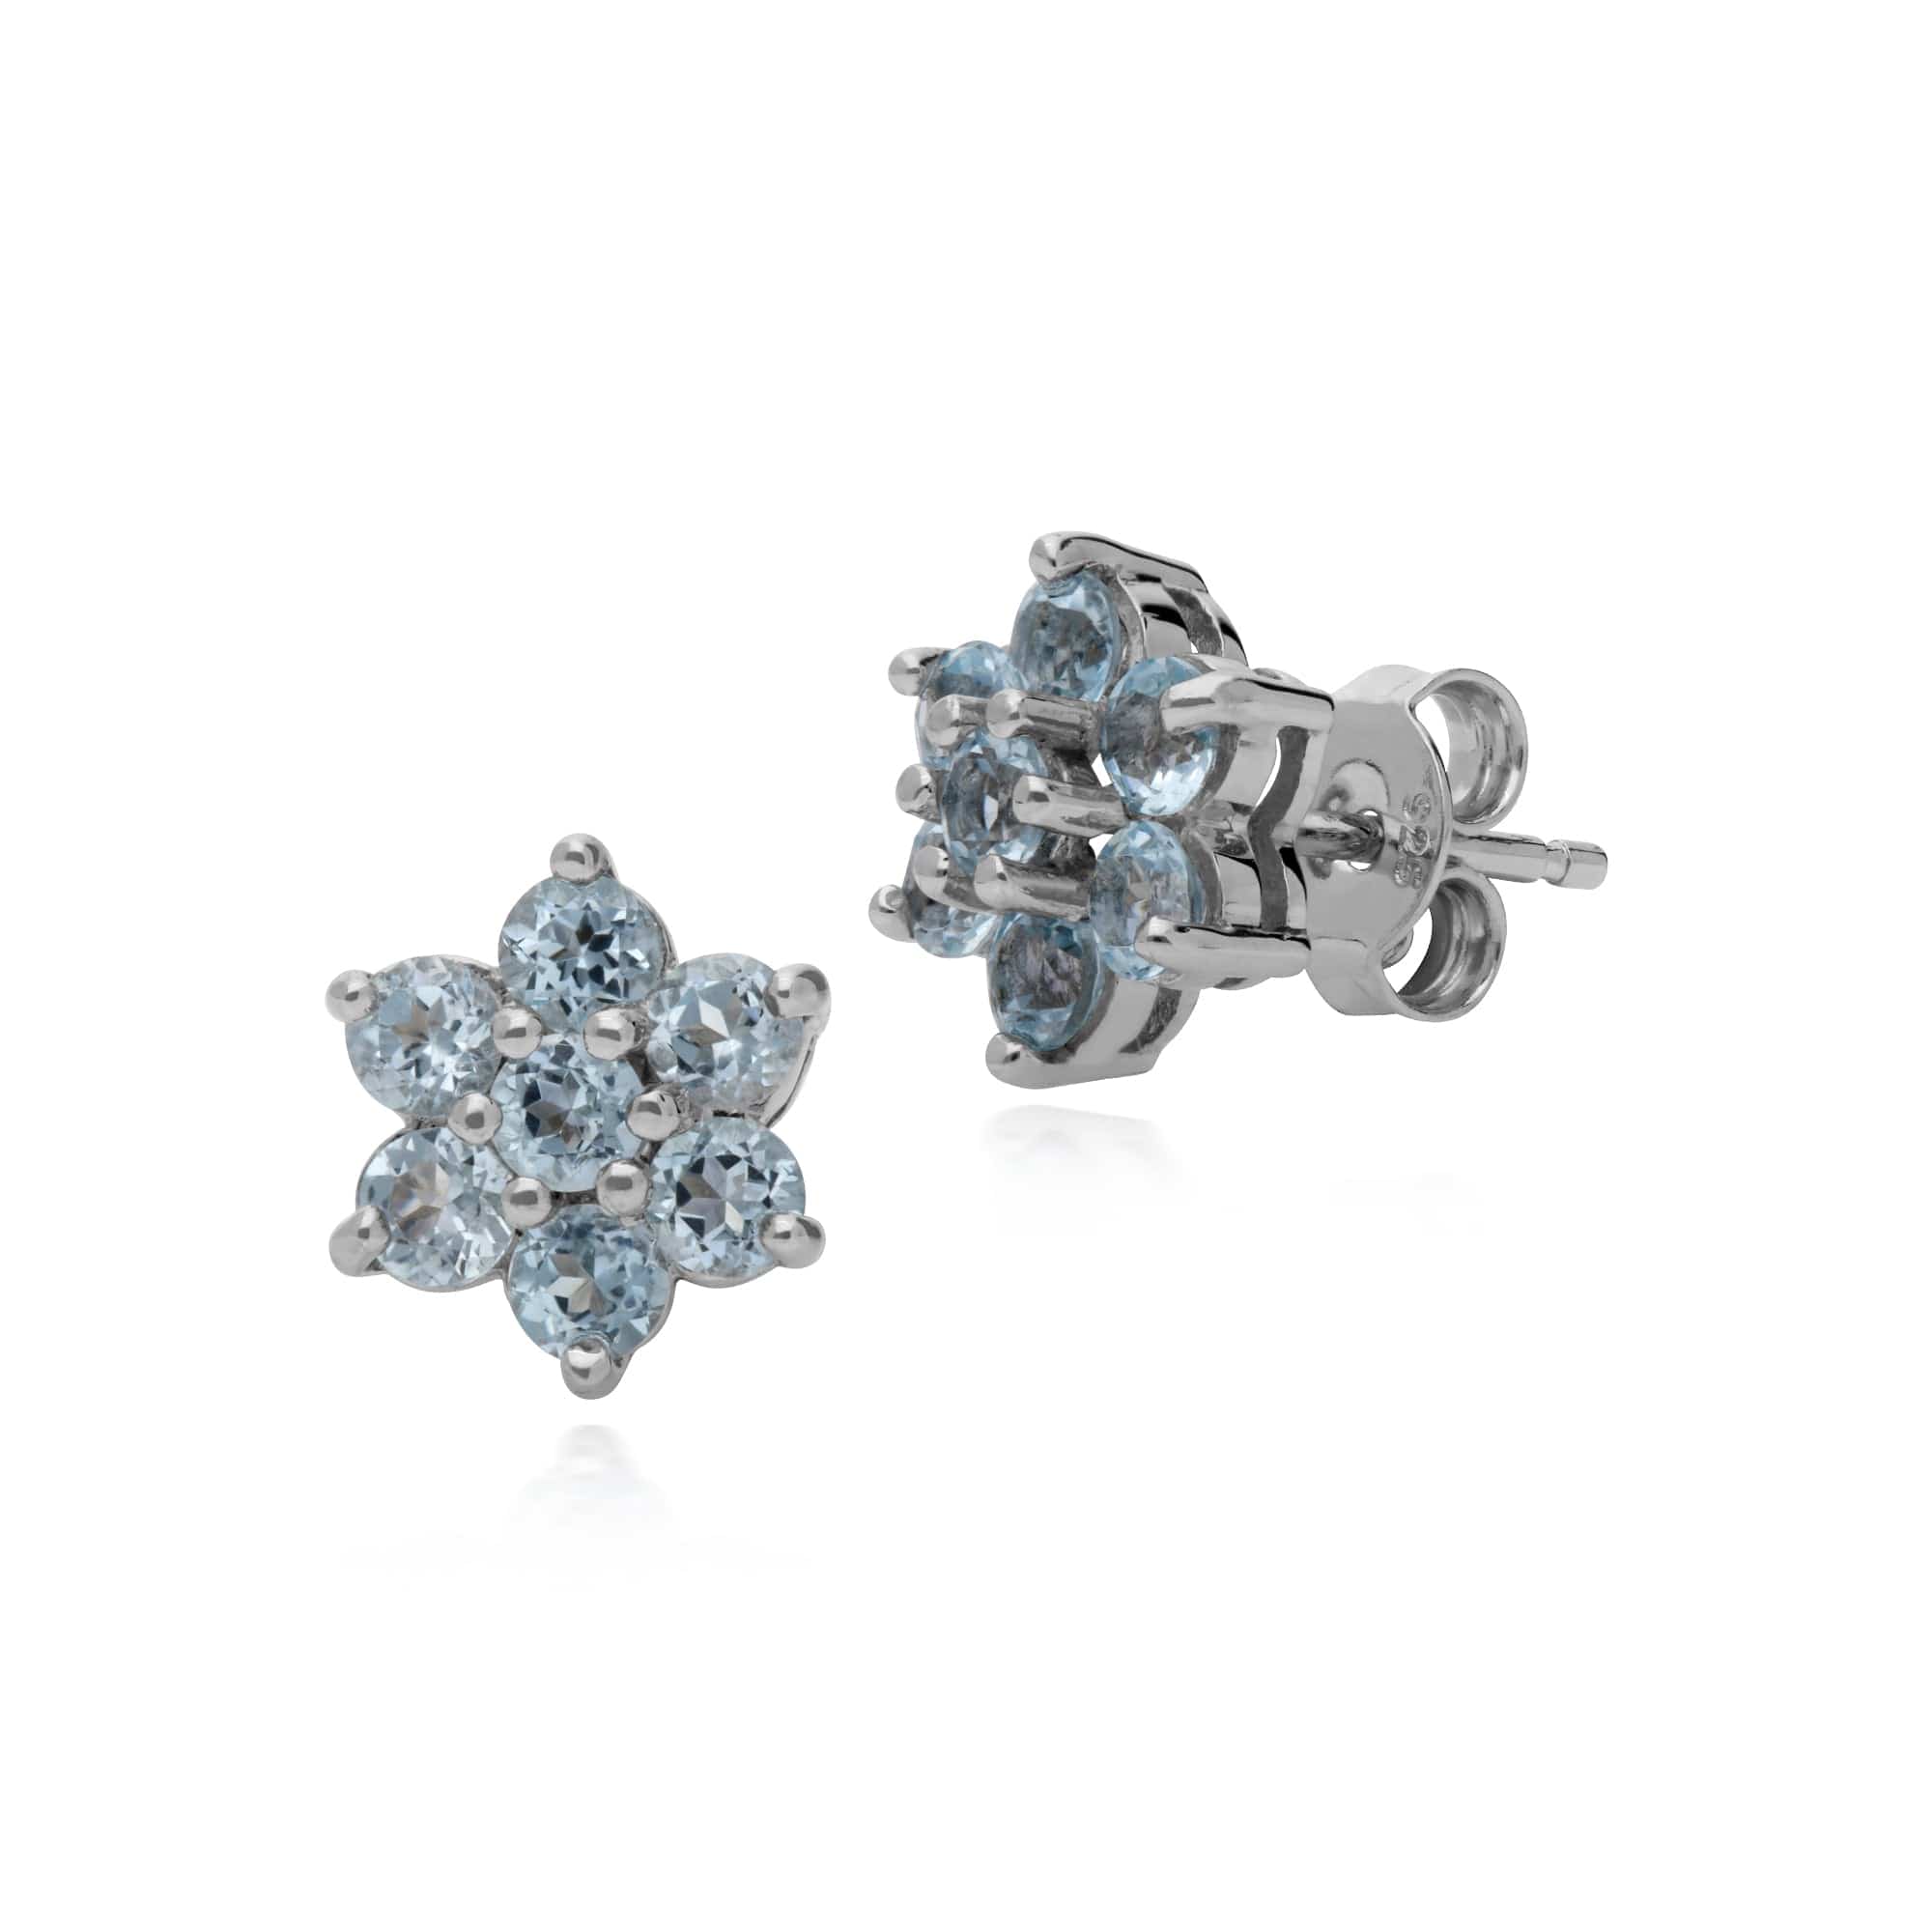 Gemondo Sterling Silver Blue Topaz Floral Cluster Earrings - Gemondo